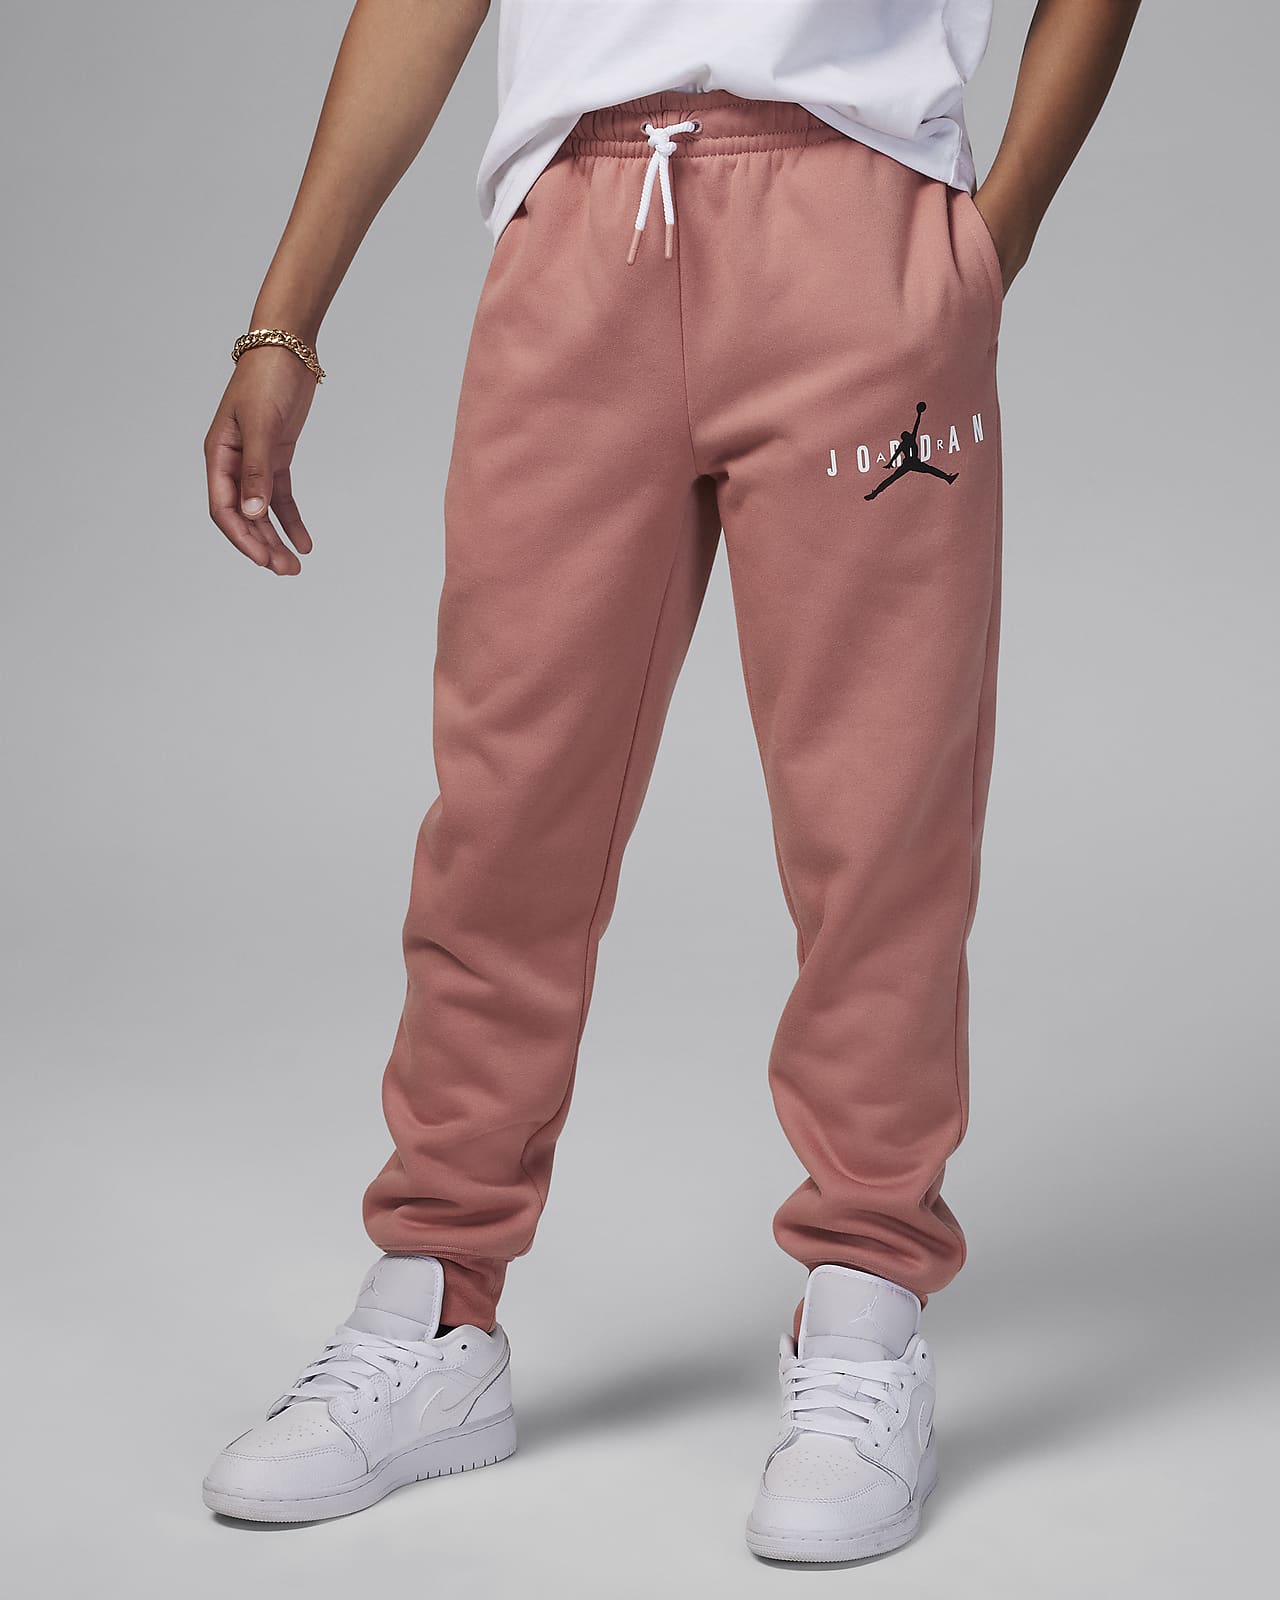 Jordan Pantalons de teixit Fleece - Nen/a